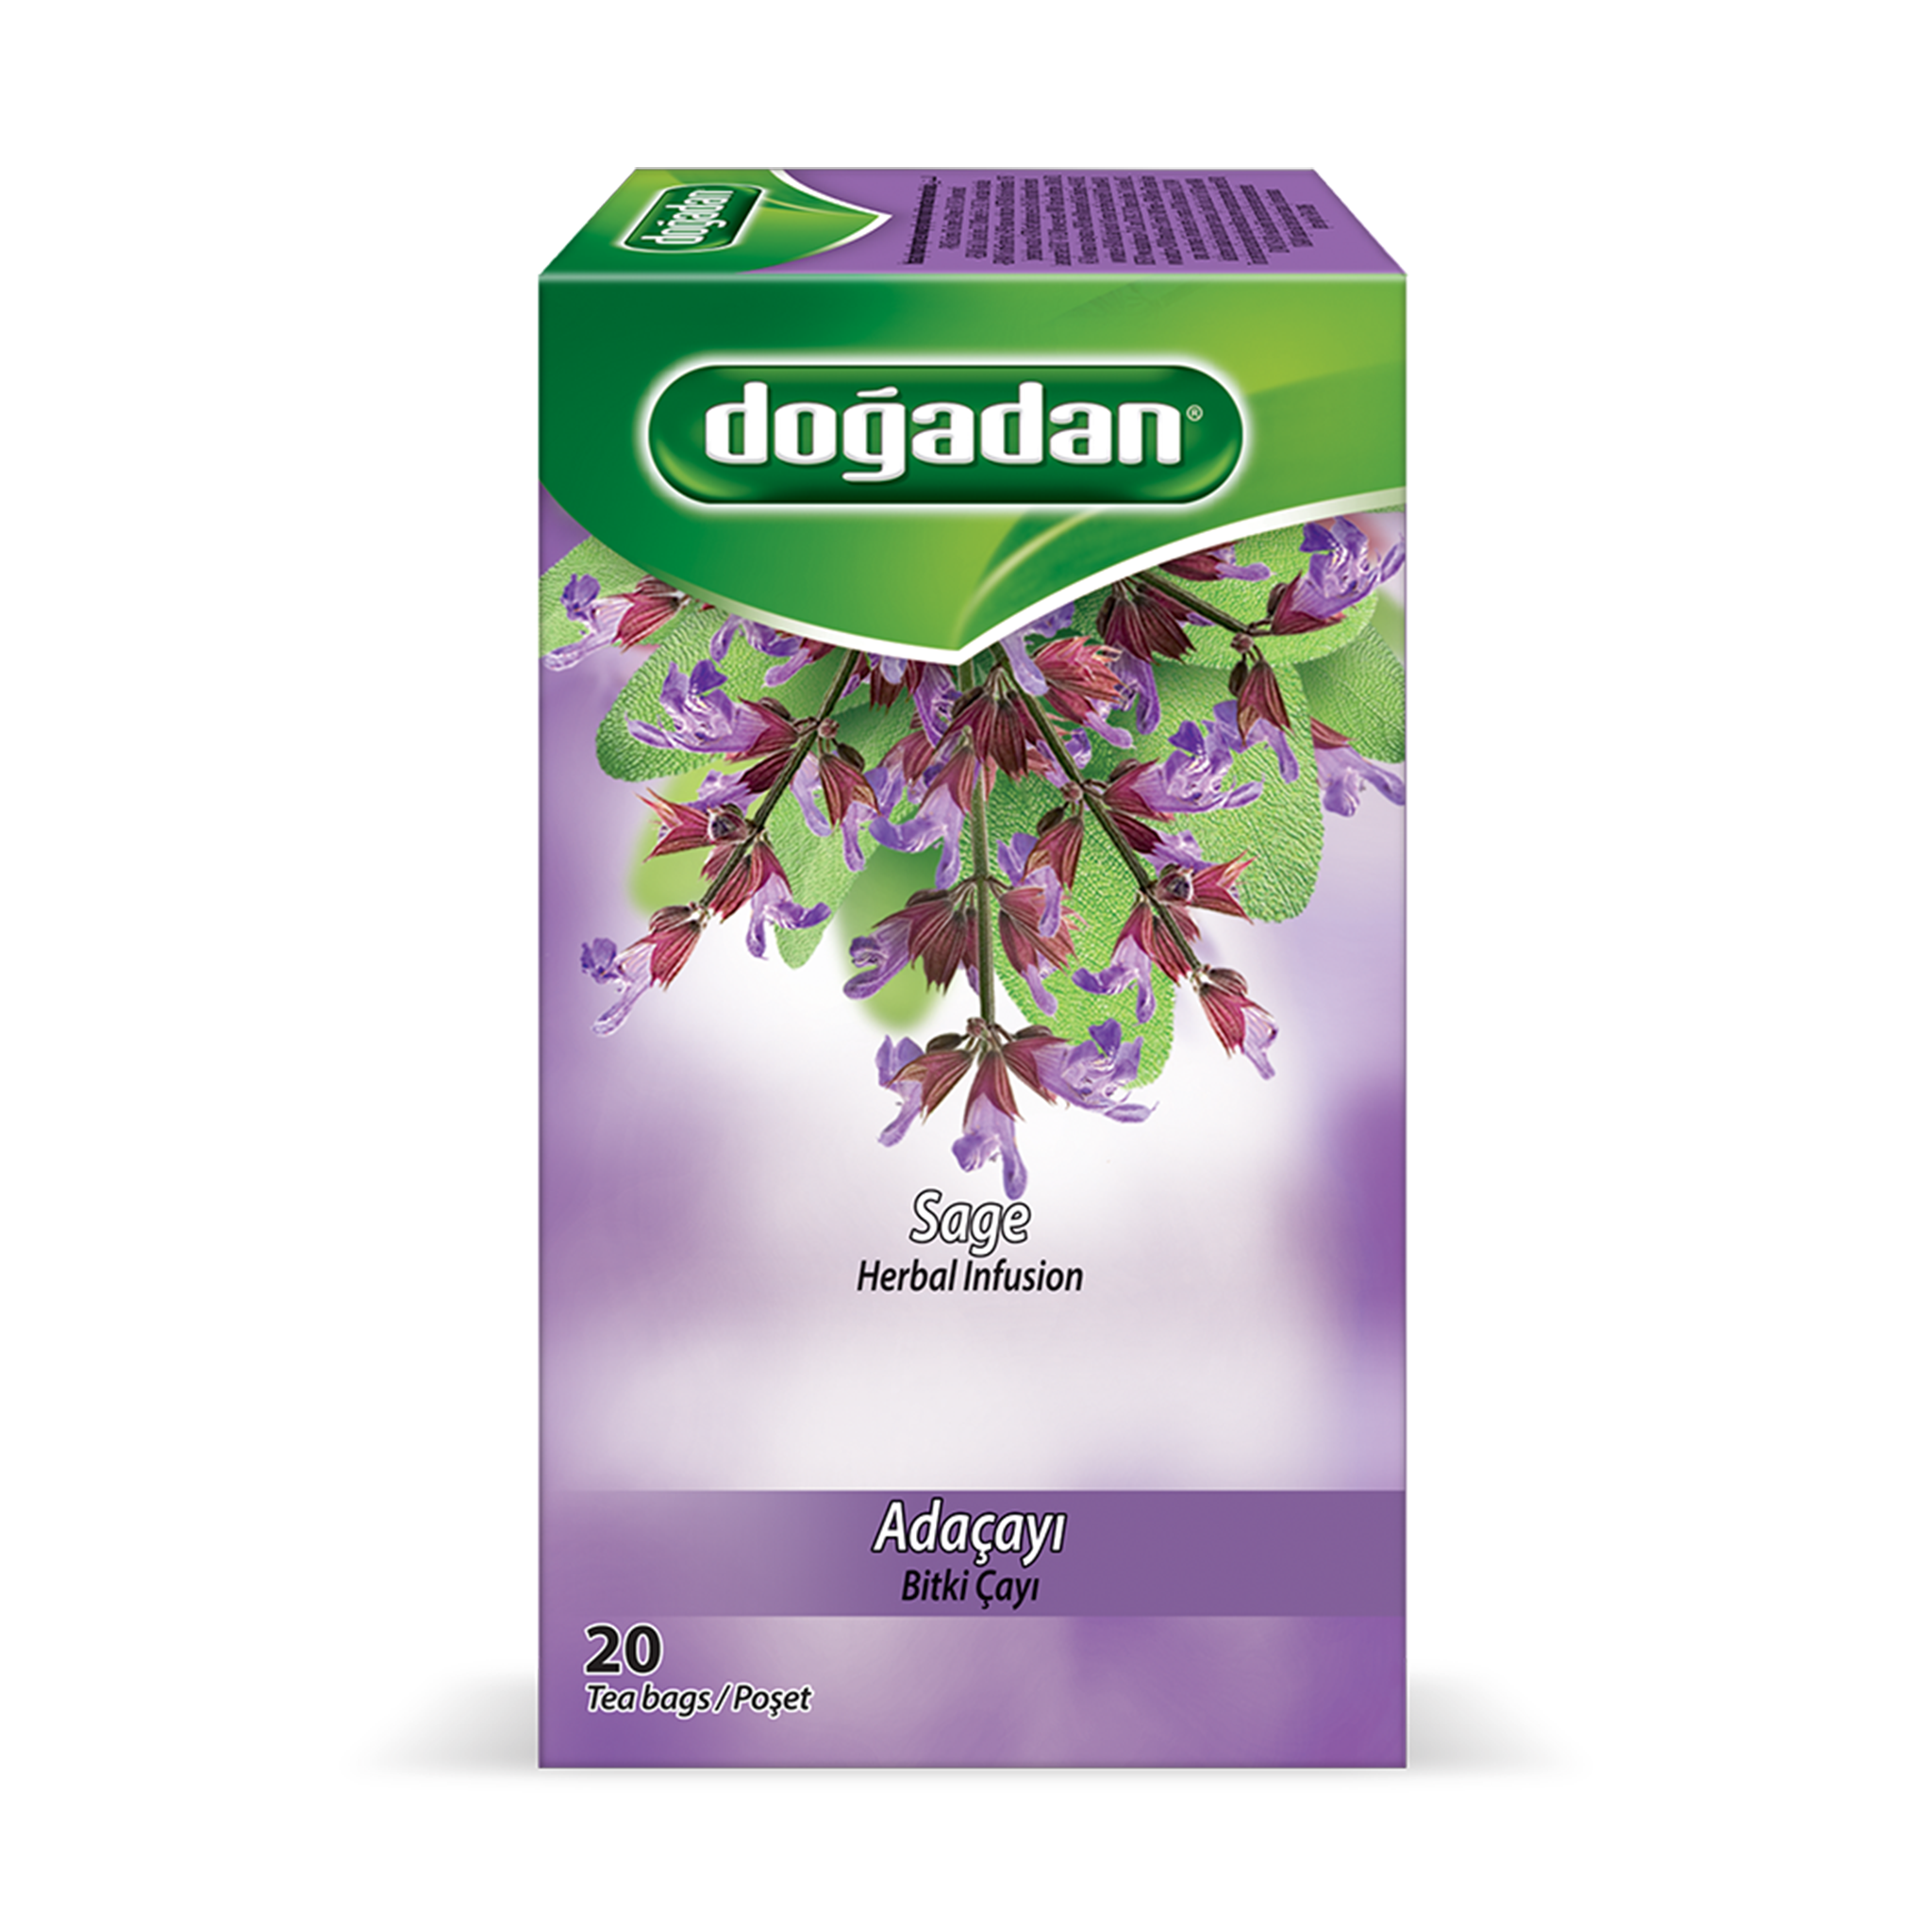 Dogadan Sage Herbal Tea 1.3g×20P | Dogadan Adacayi Bitki Cayi | Sage Herbal Infusion